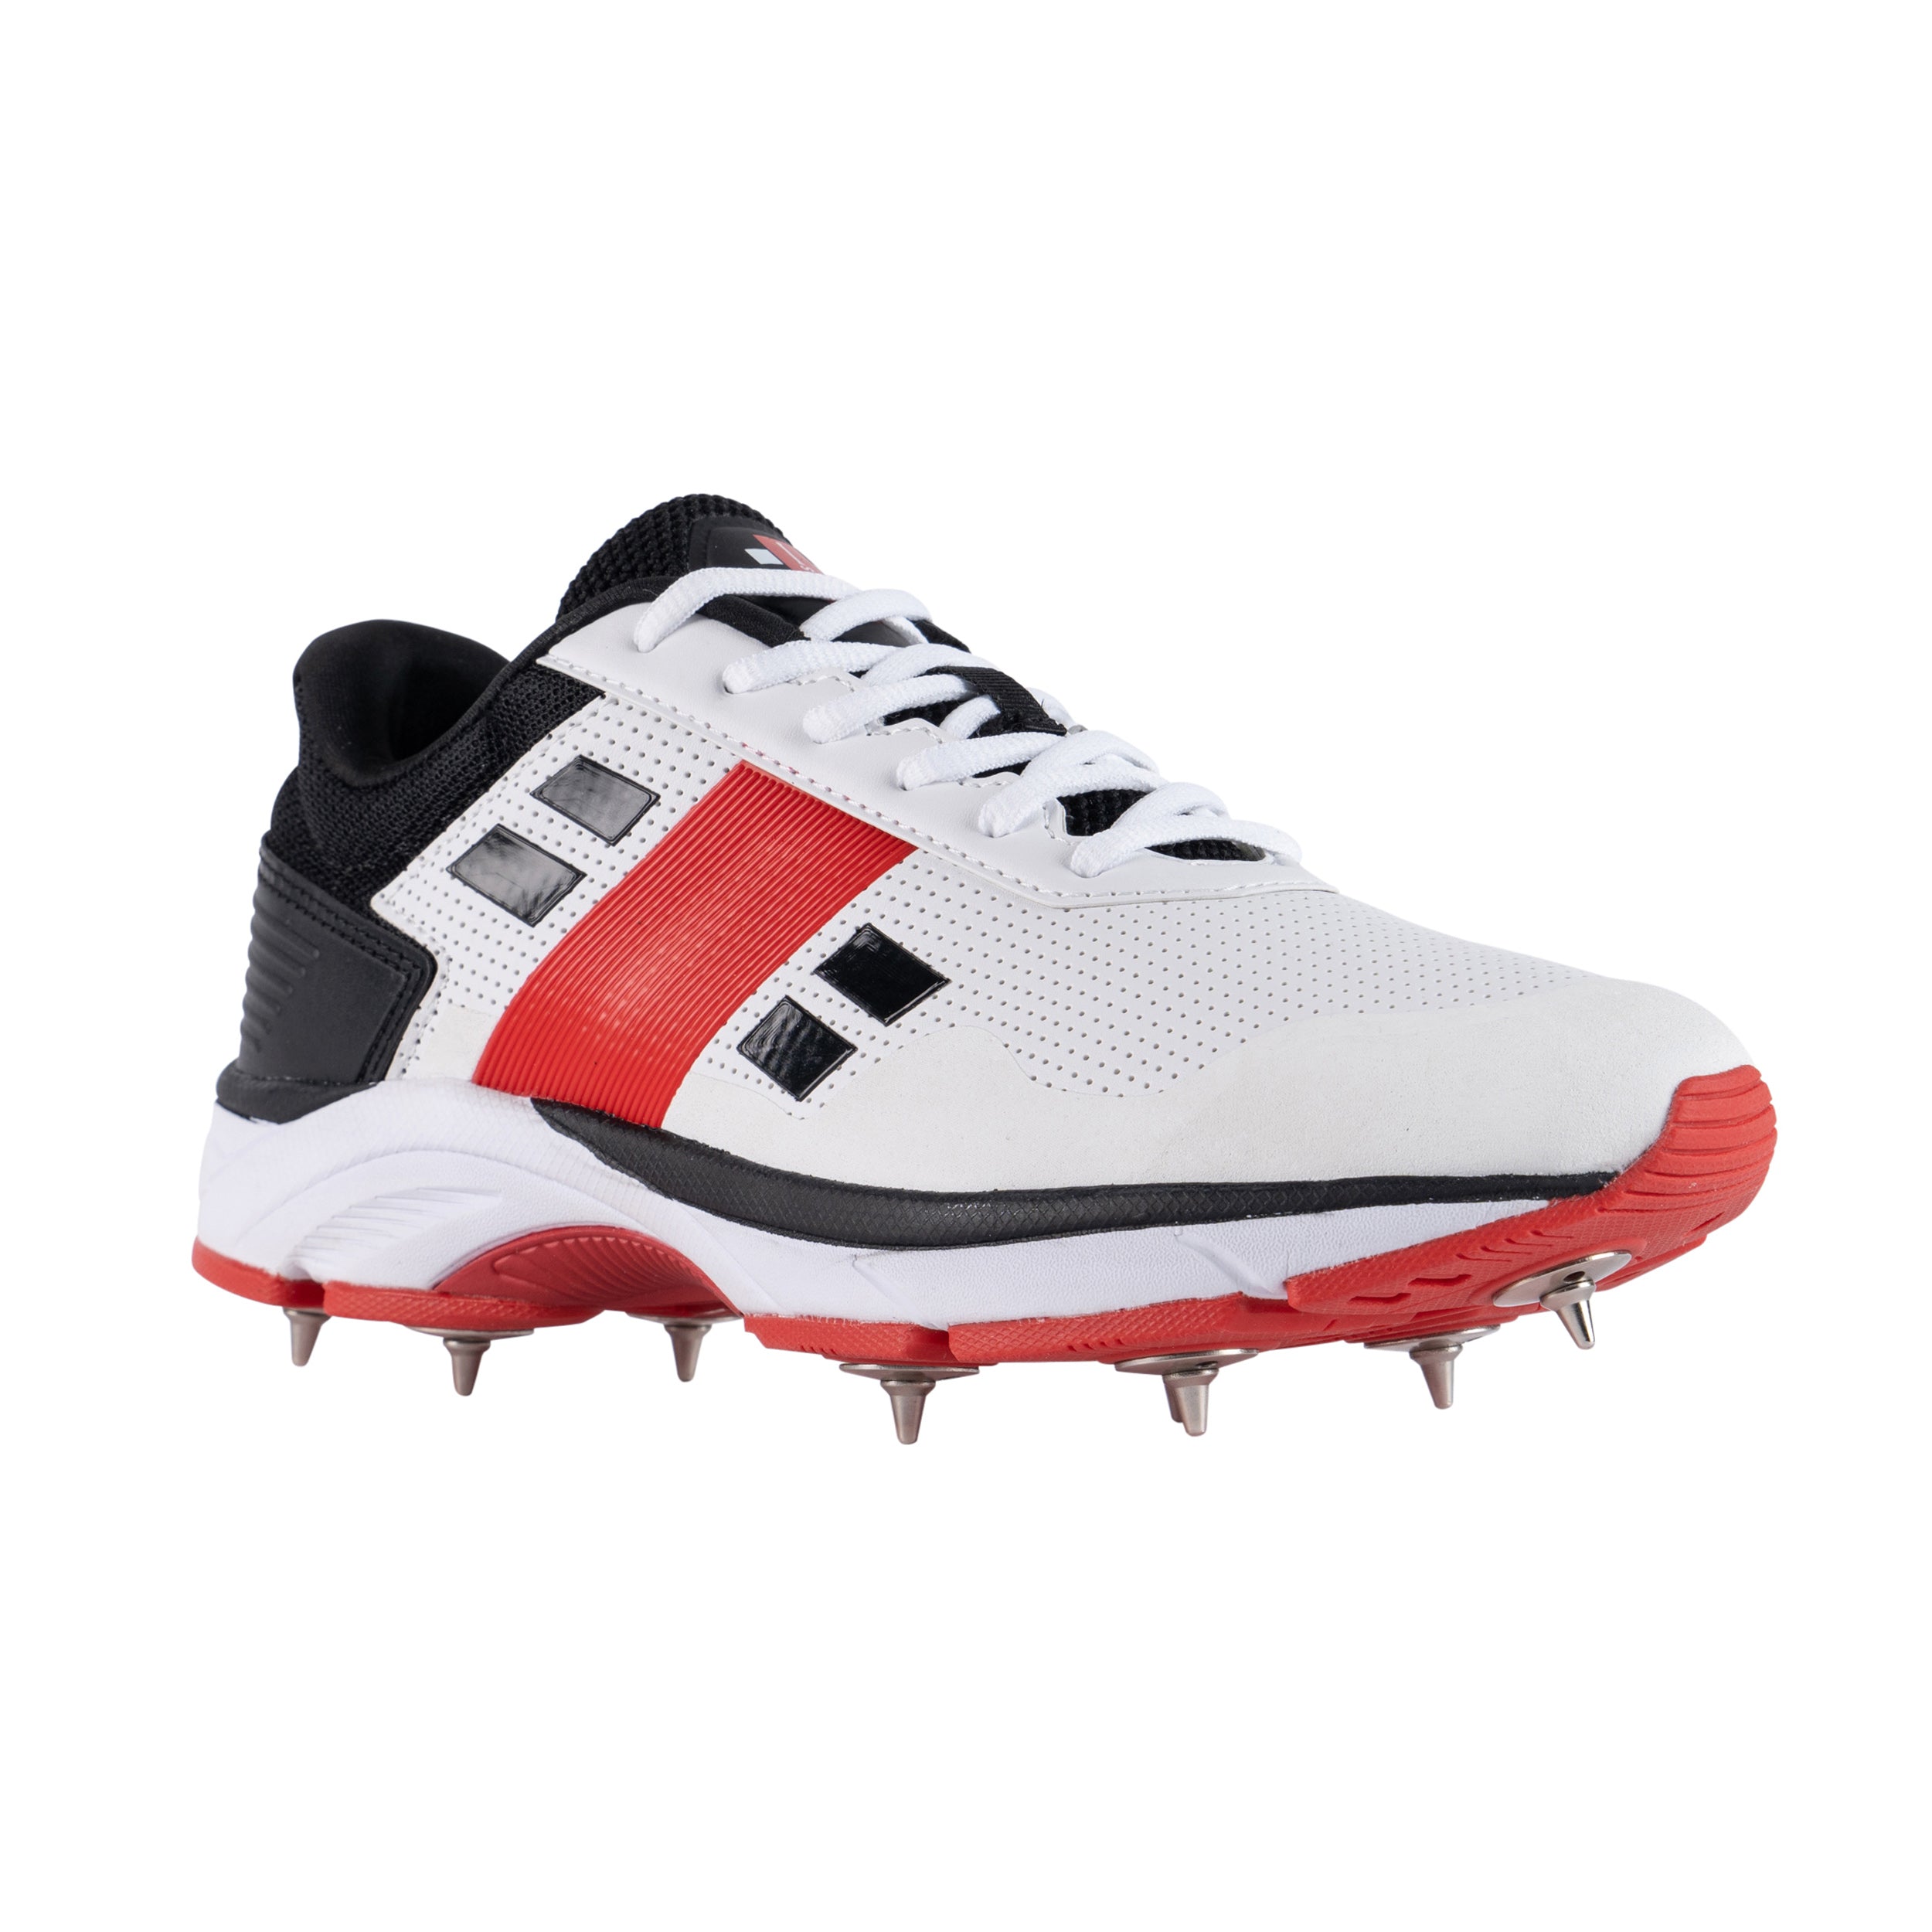 Gray Nicolls Velocity 4.0 Full Spike Cricket Shoes - Junior